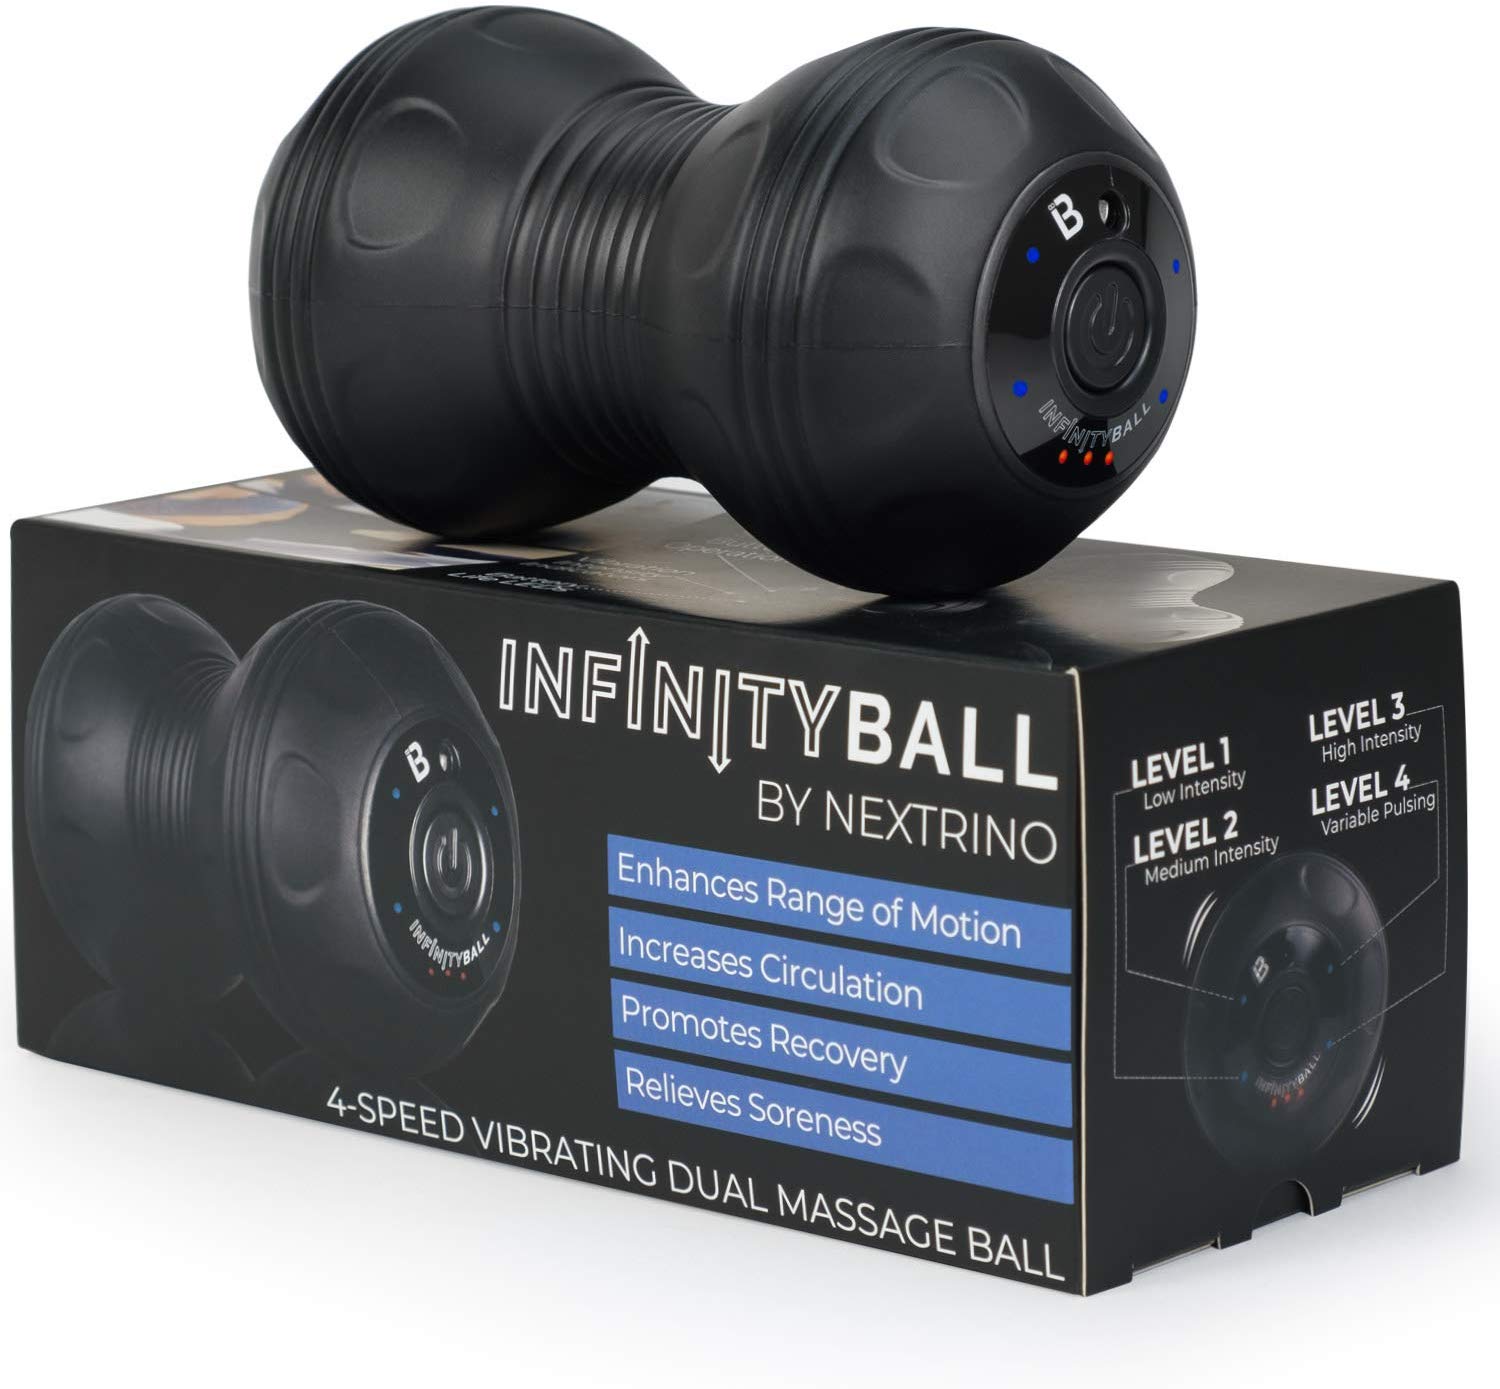 Review of Nextrino InfinityBall 4-Speed Vibrating Massage Ball - Lacrosse Balls Meet a Vibration Foam Roller!